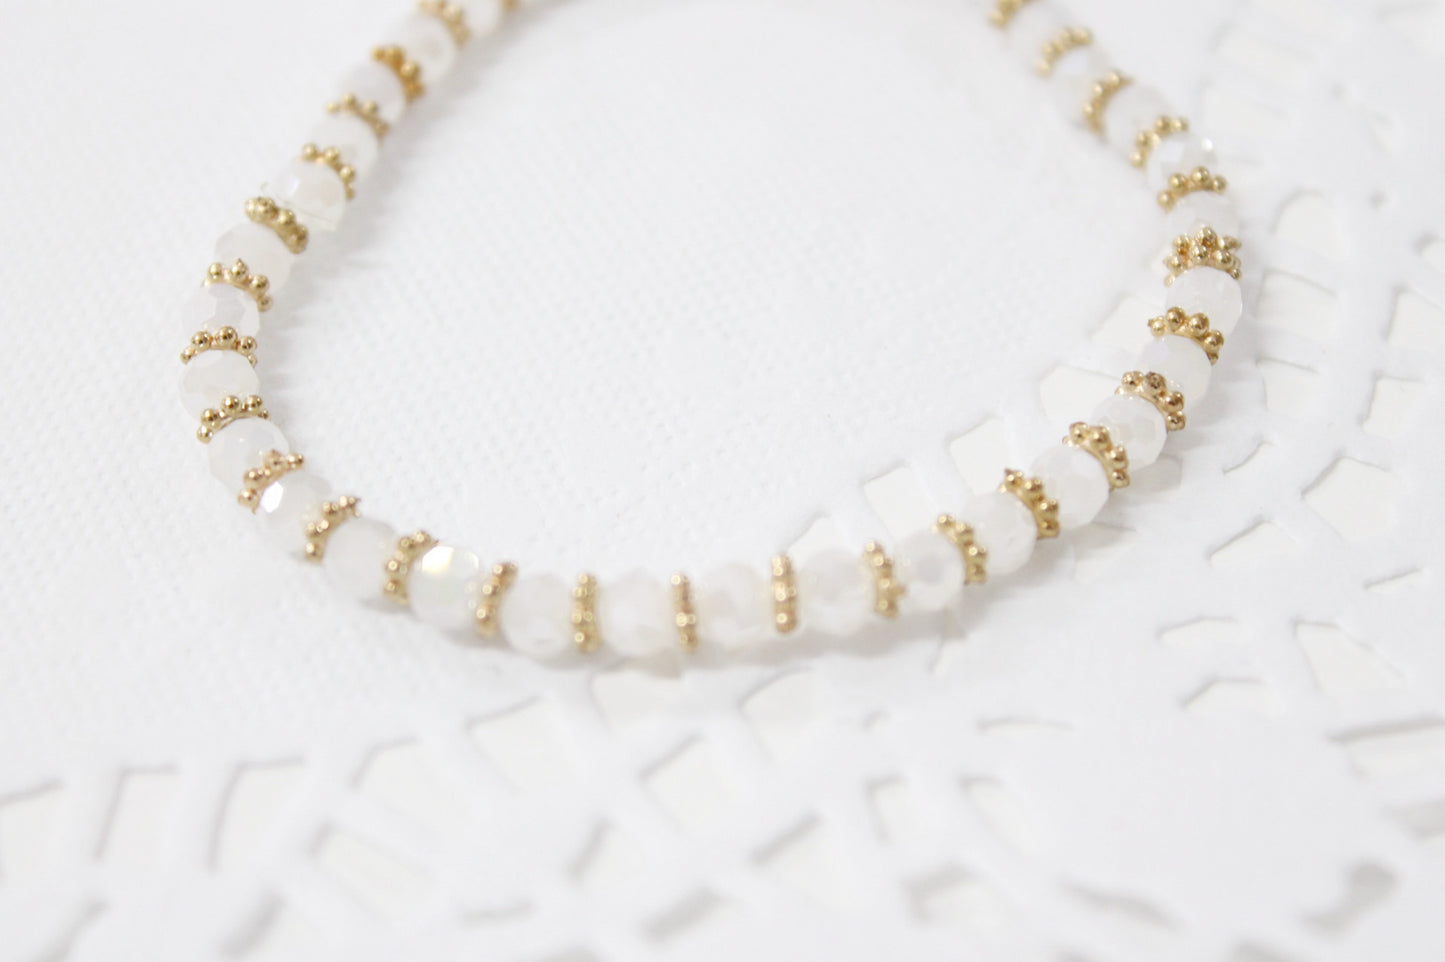 White and Gold Crystal Beaded Bracelet